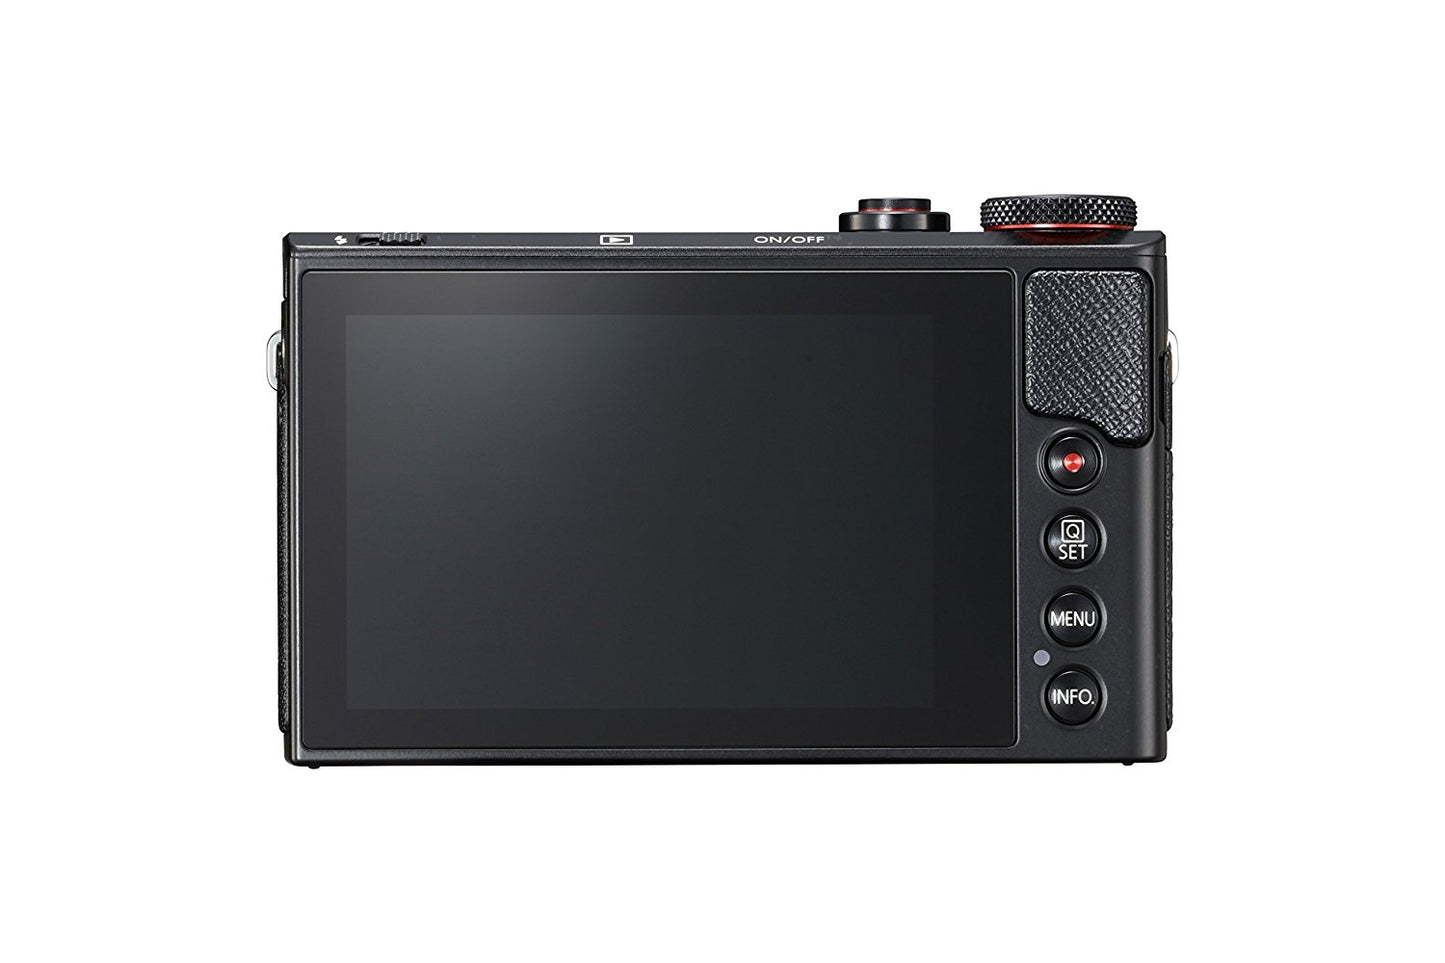 Canon PowerShot G9 X Mark II Digital Camera (Black)